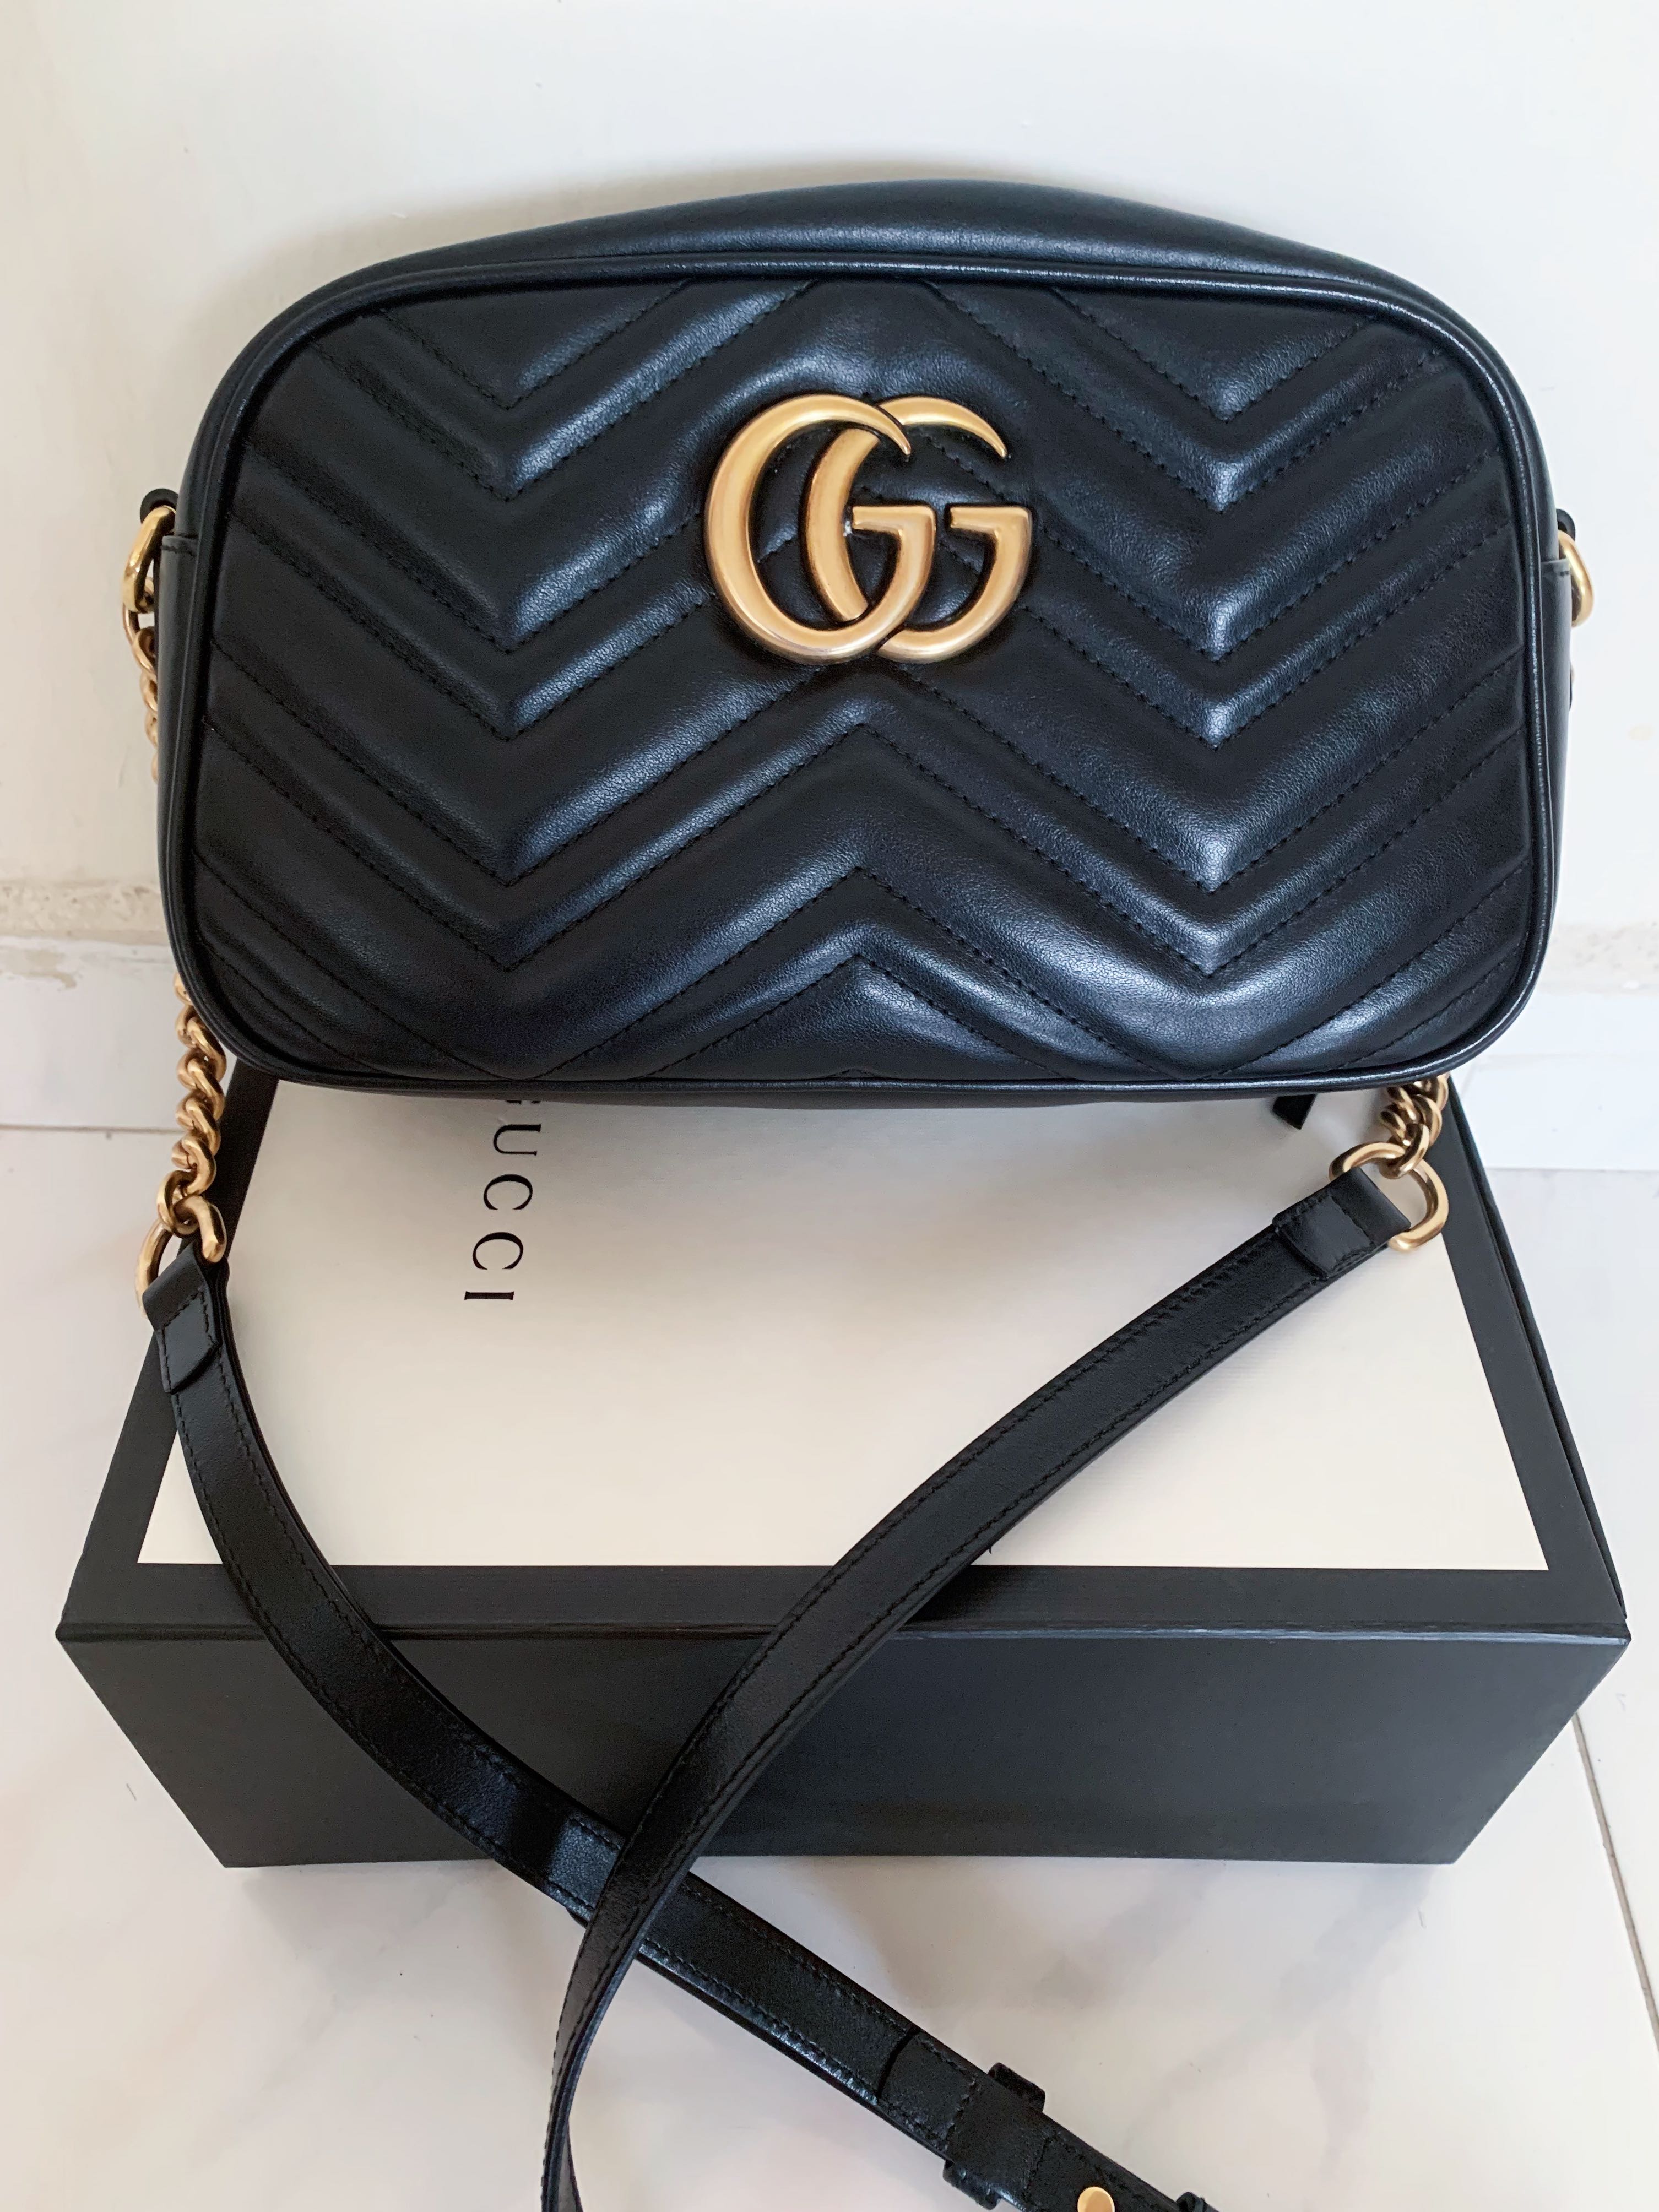 Gucci Small Soho Flap Crossbody Bag | eBay